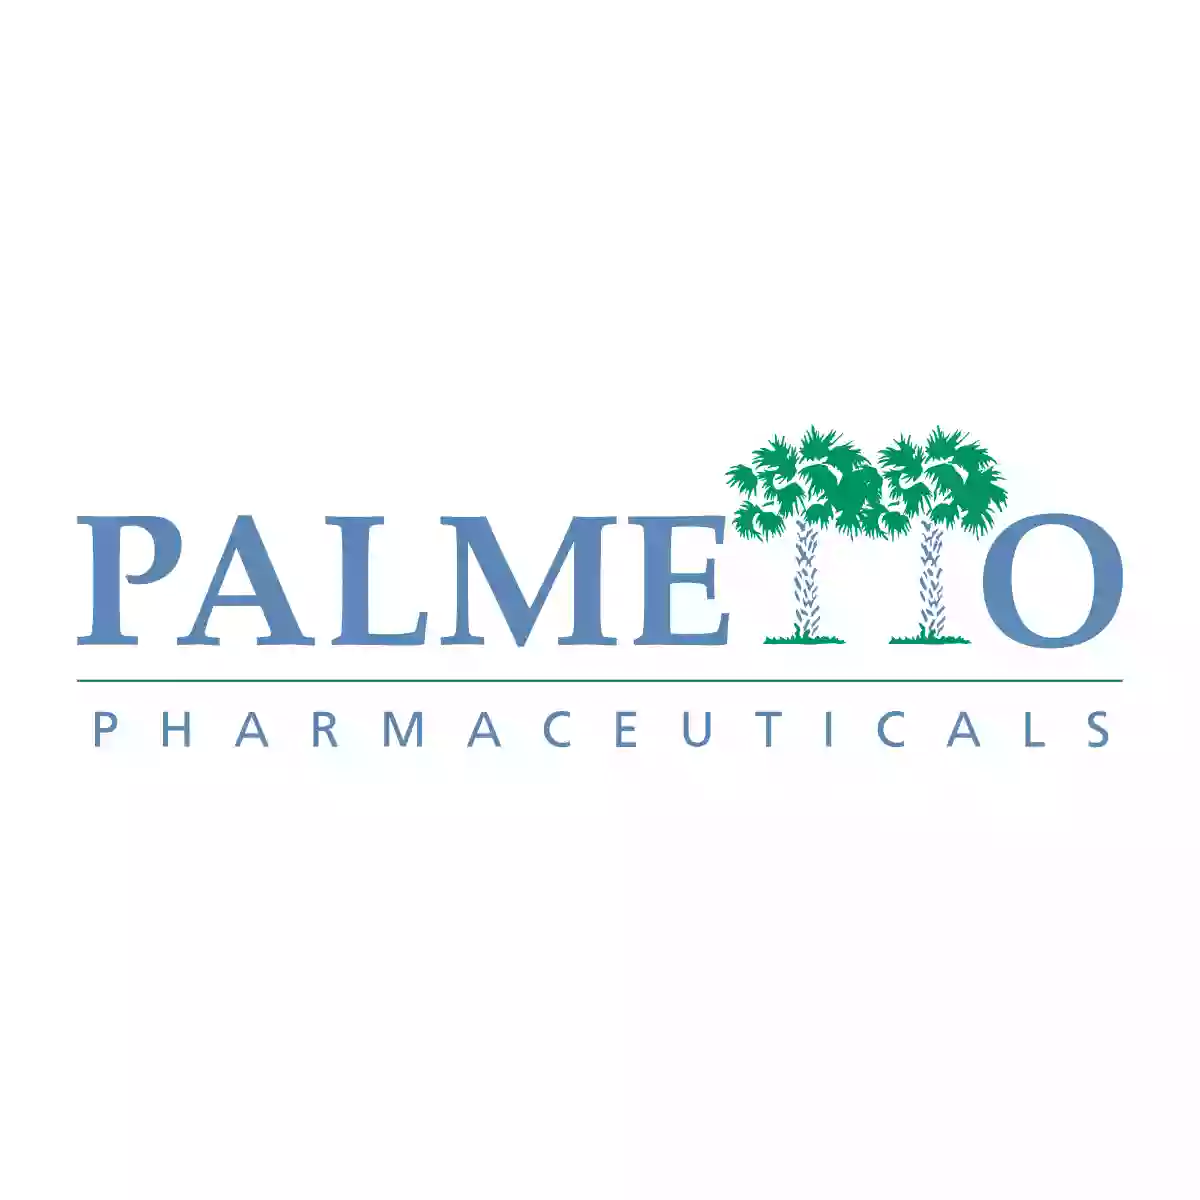 Palmetto Pharmaceuticals